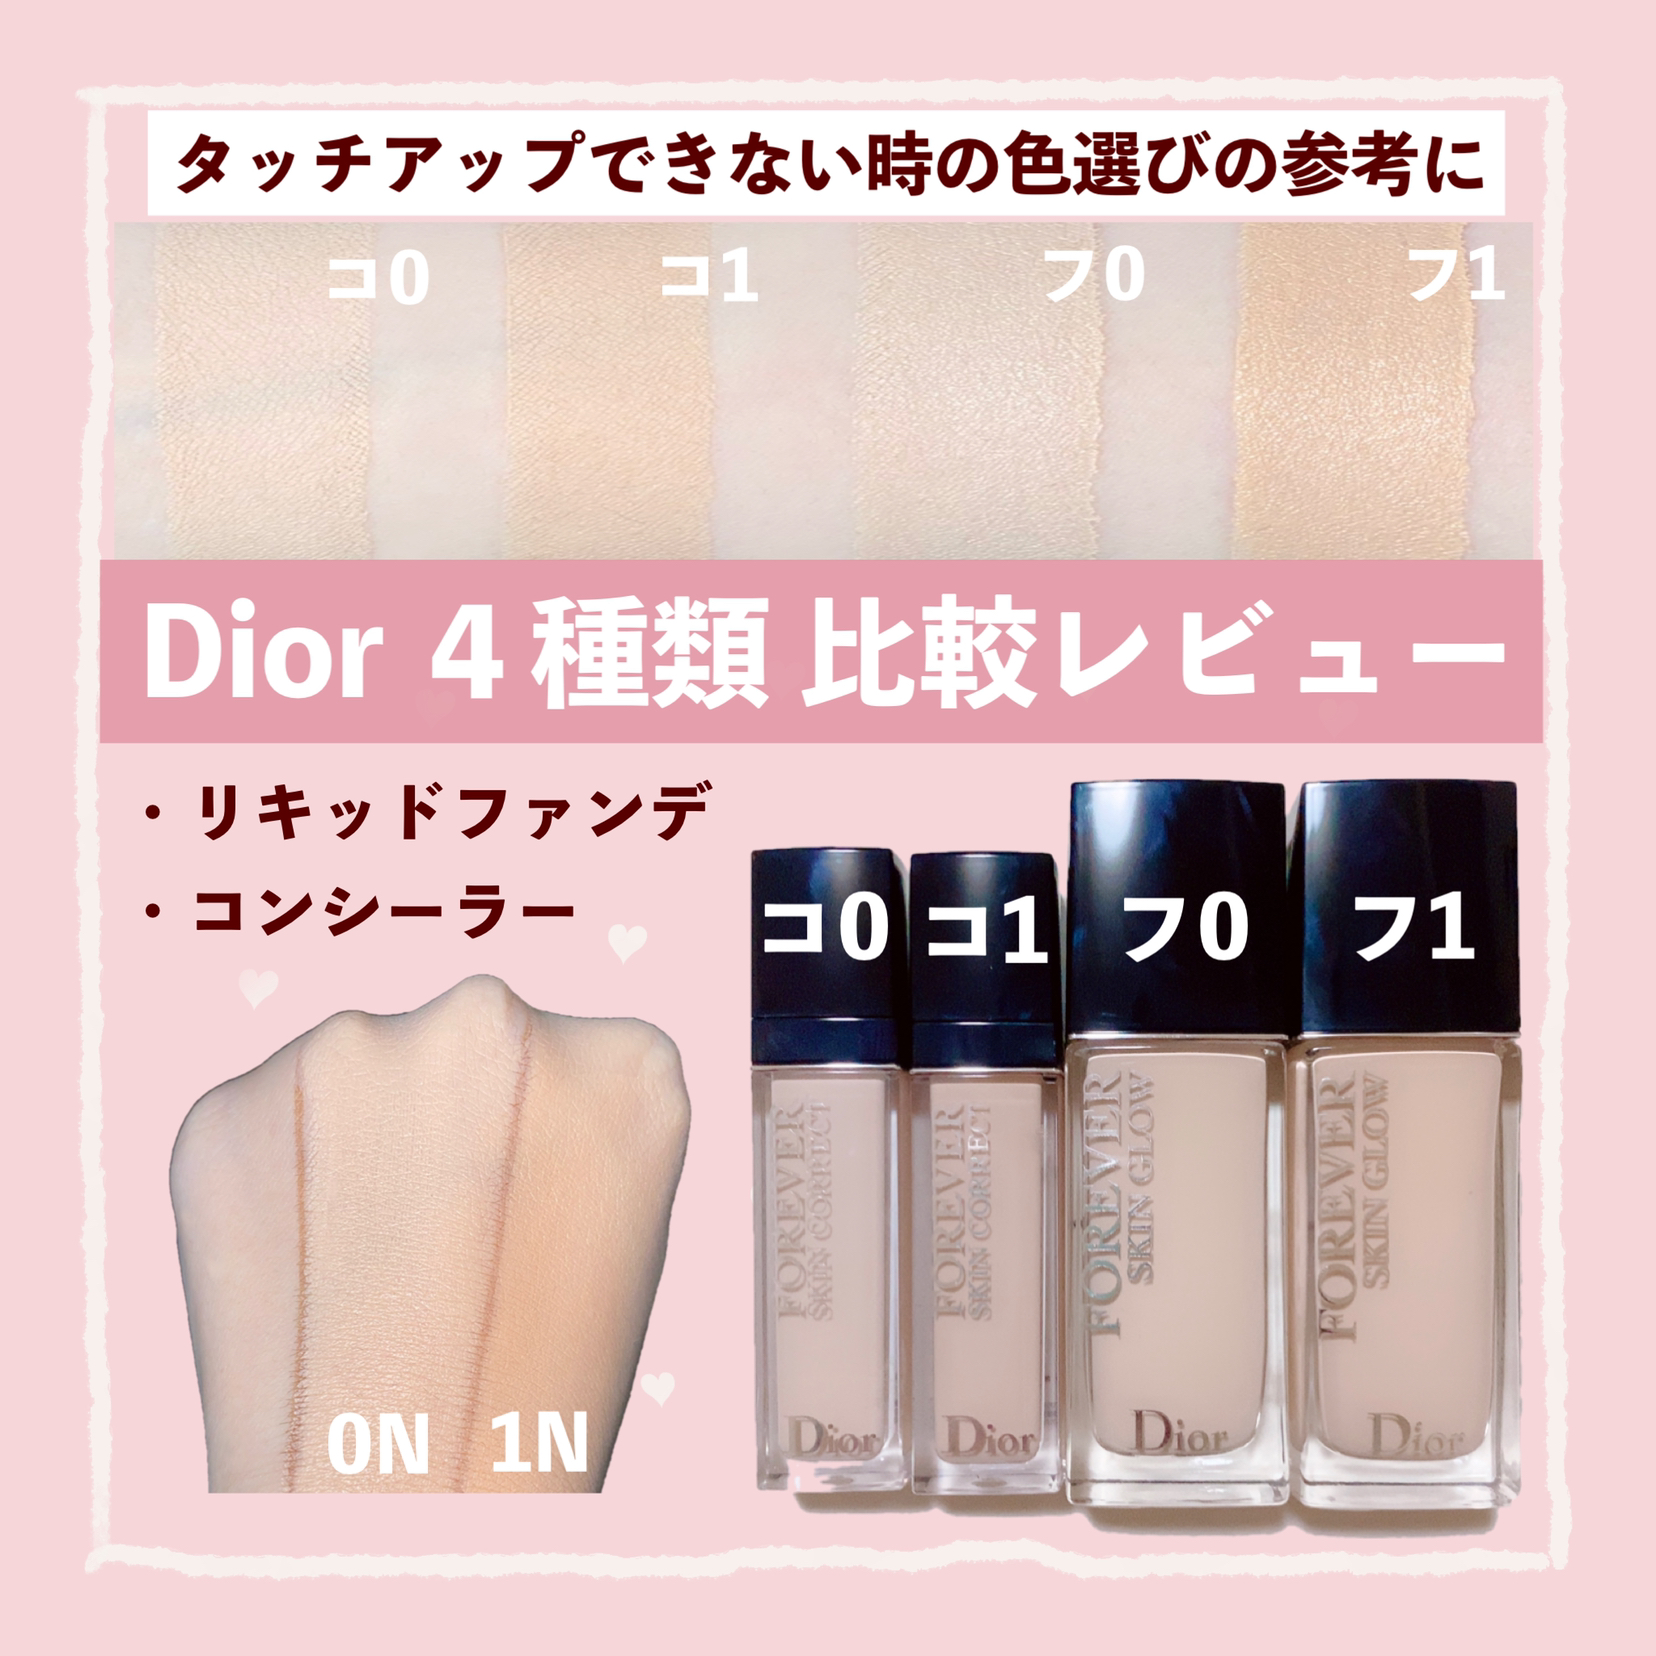 Dior コンシーラー 0N - コンシーラー